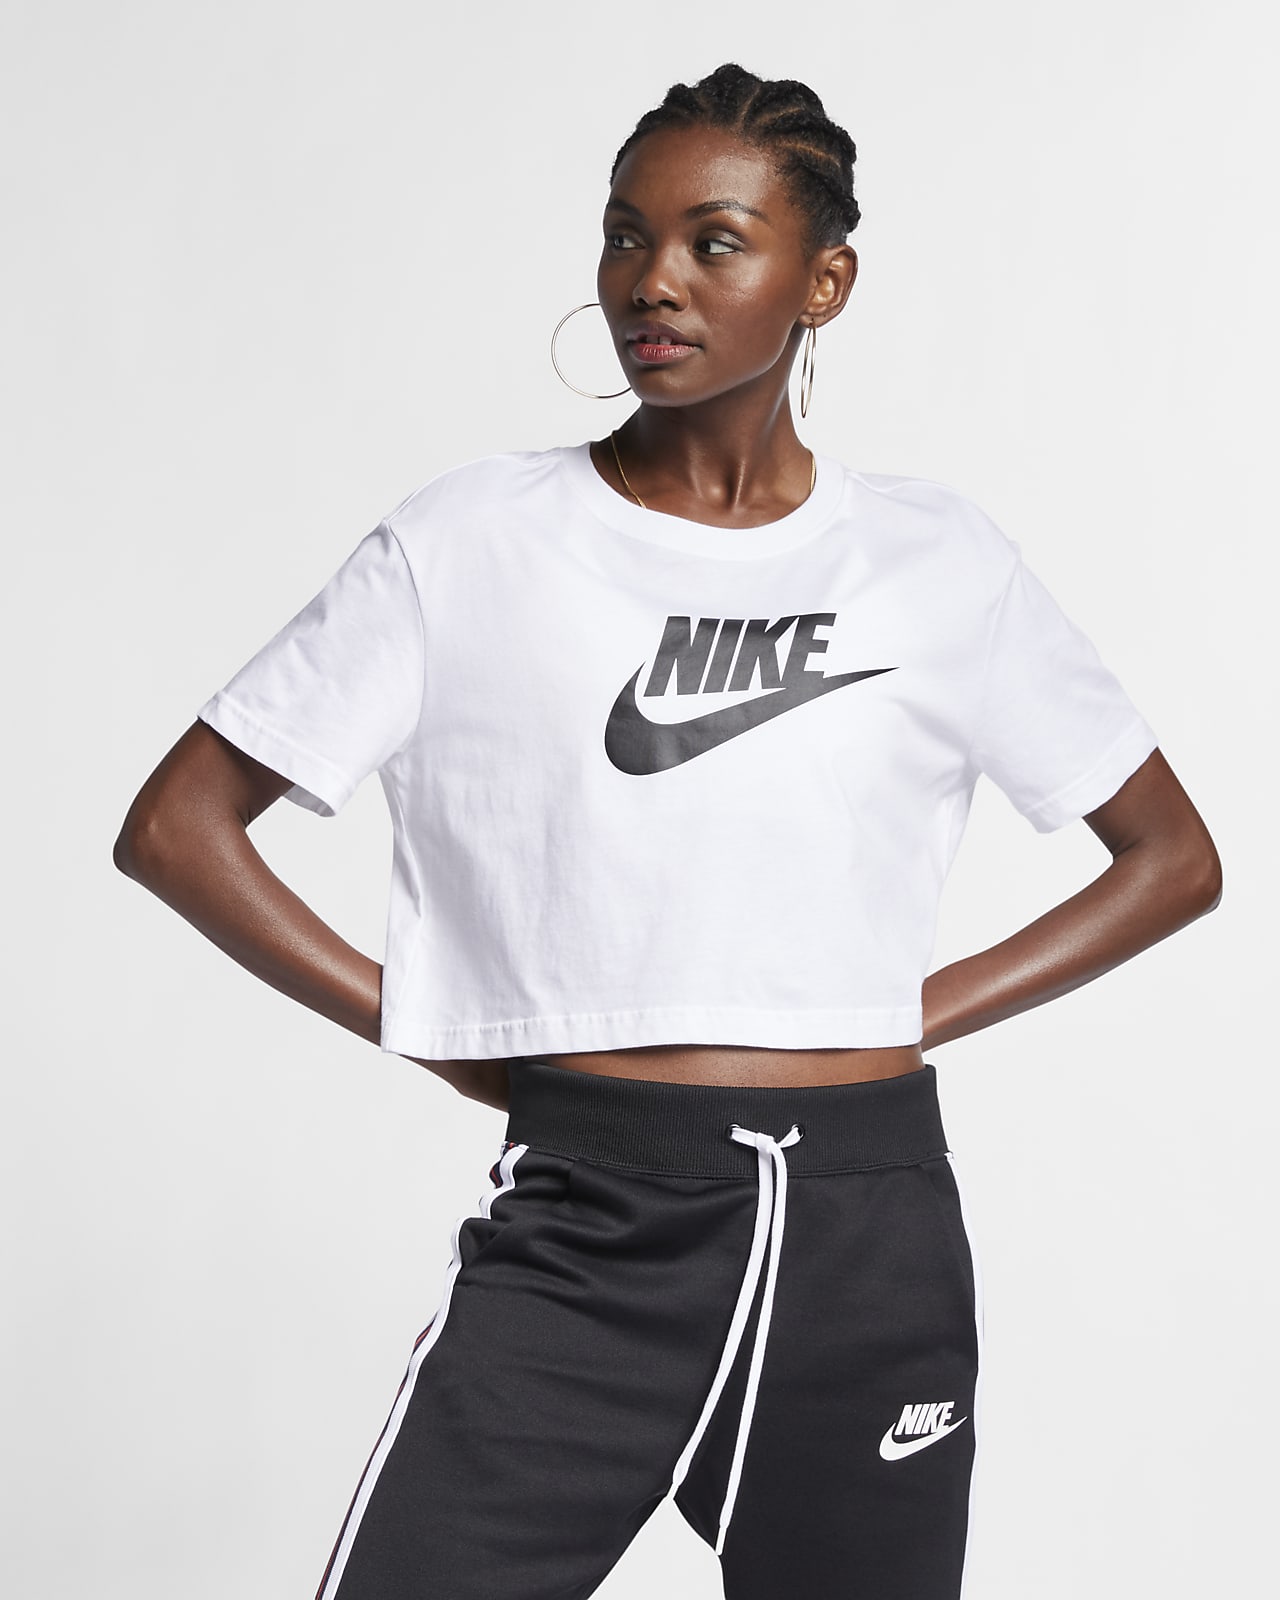 Nike Sportswear Essential kort T-skjorte med logo til dame